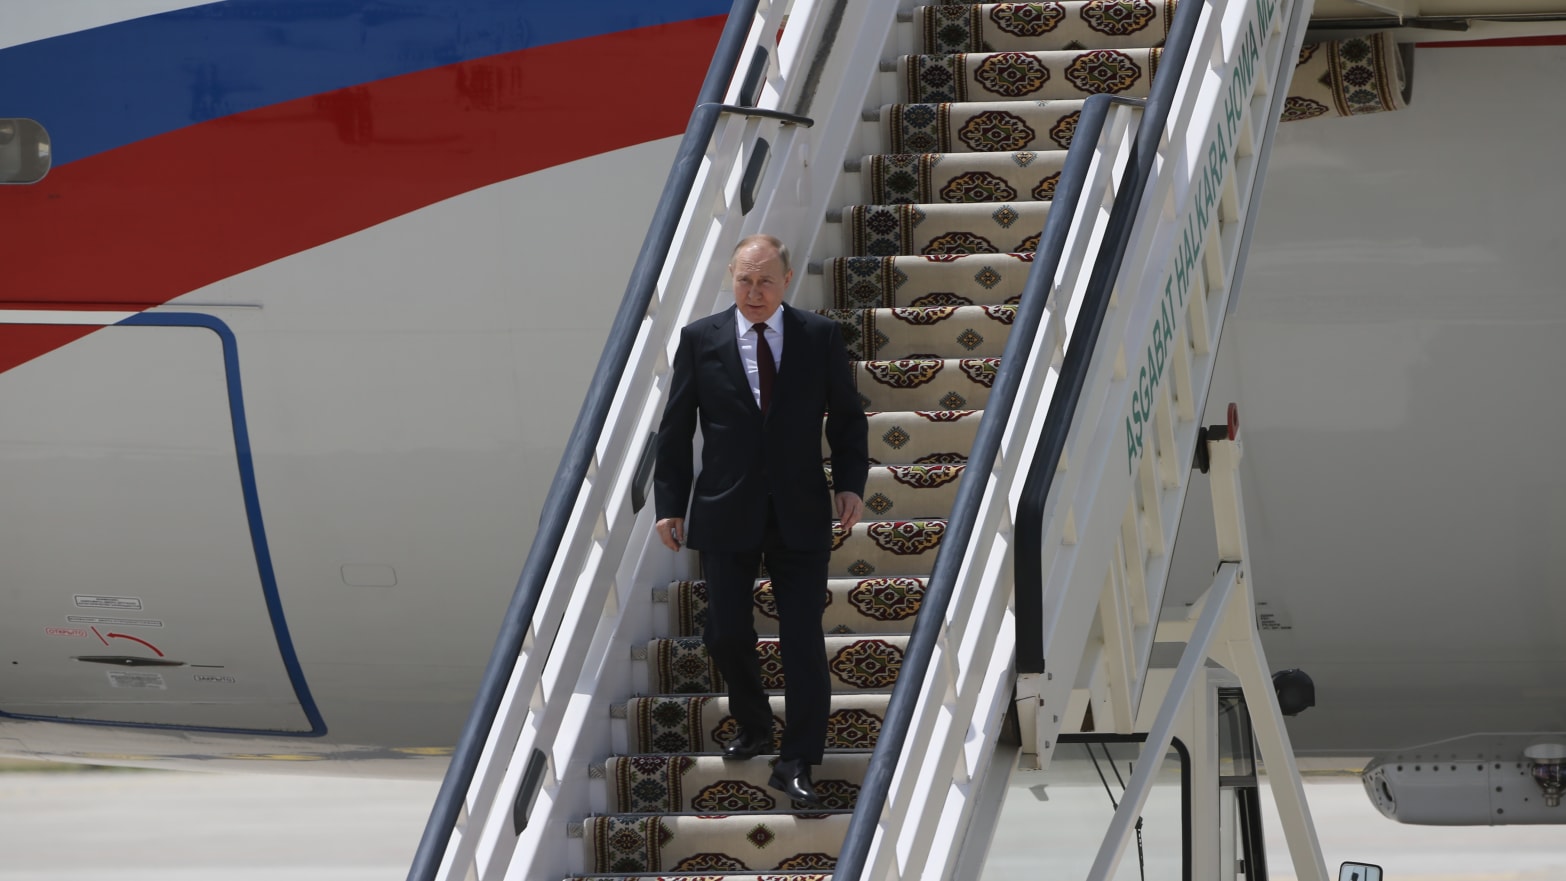 Russian President Vladimir Putin leaves his presidential plane during the arrival ceremony at the Ashgabat International Airport on June 29, 2022 in Ashgabat, Turkmenistan.